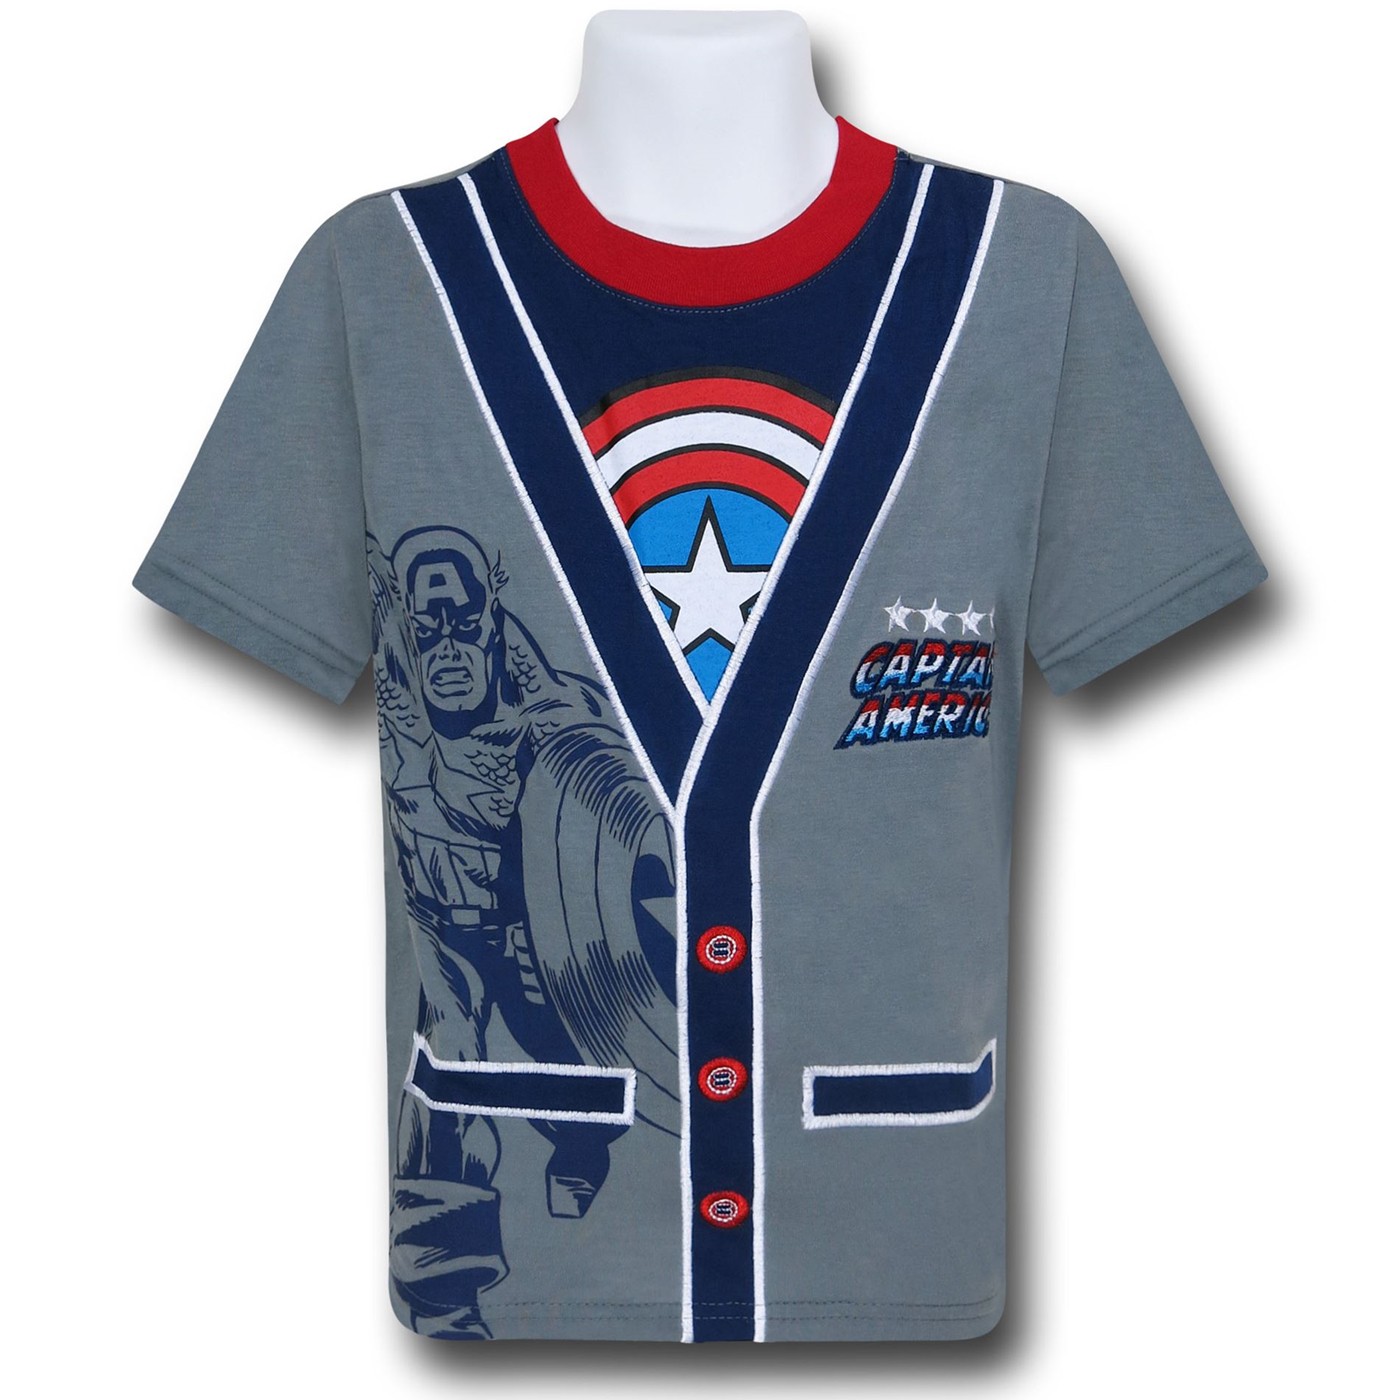 Captain America Kids Cardigan T-Shirt